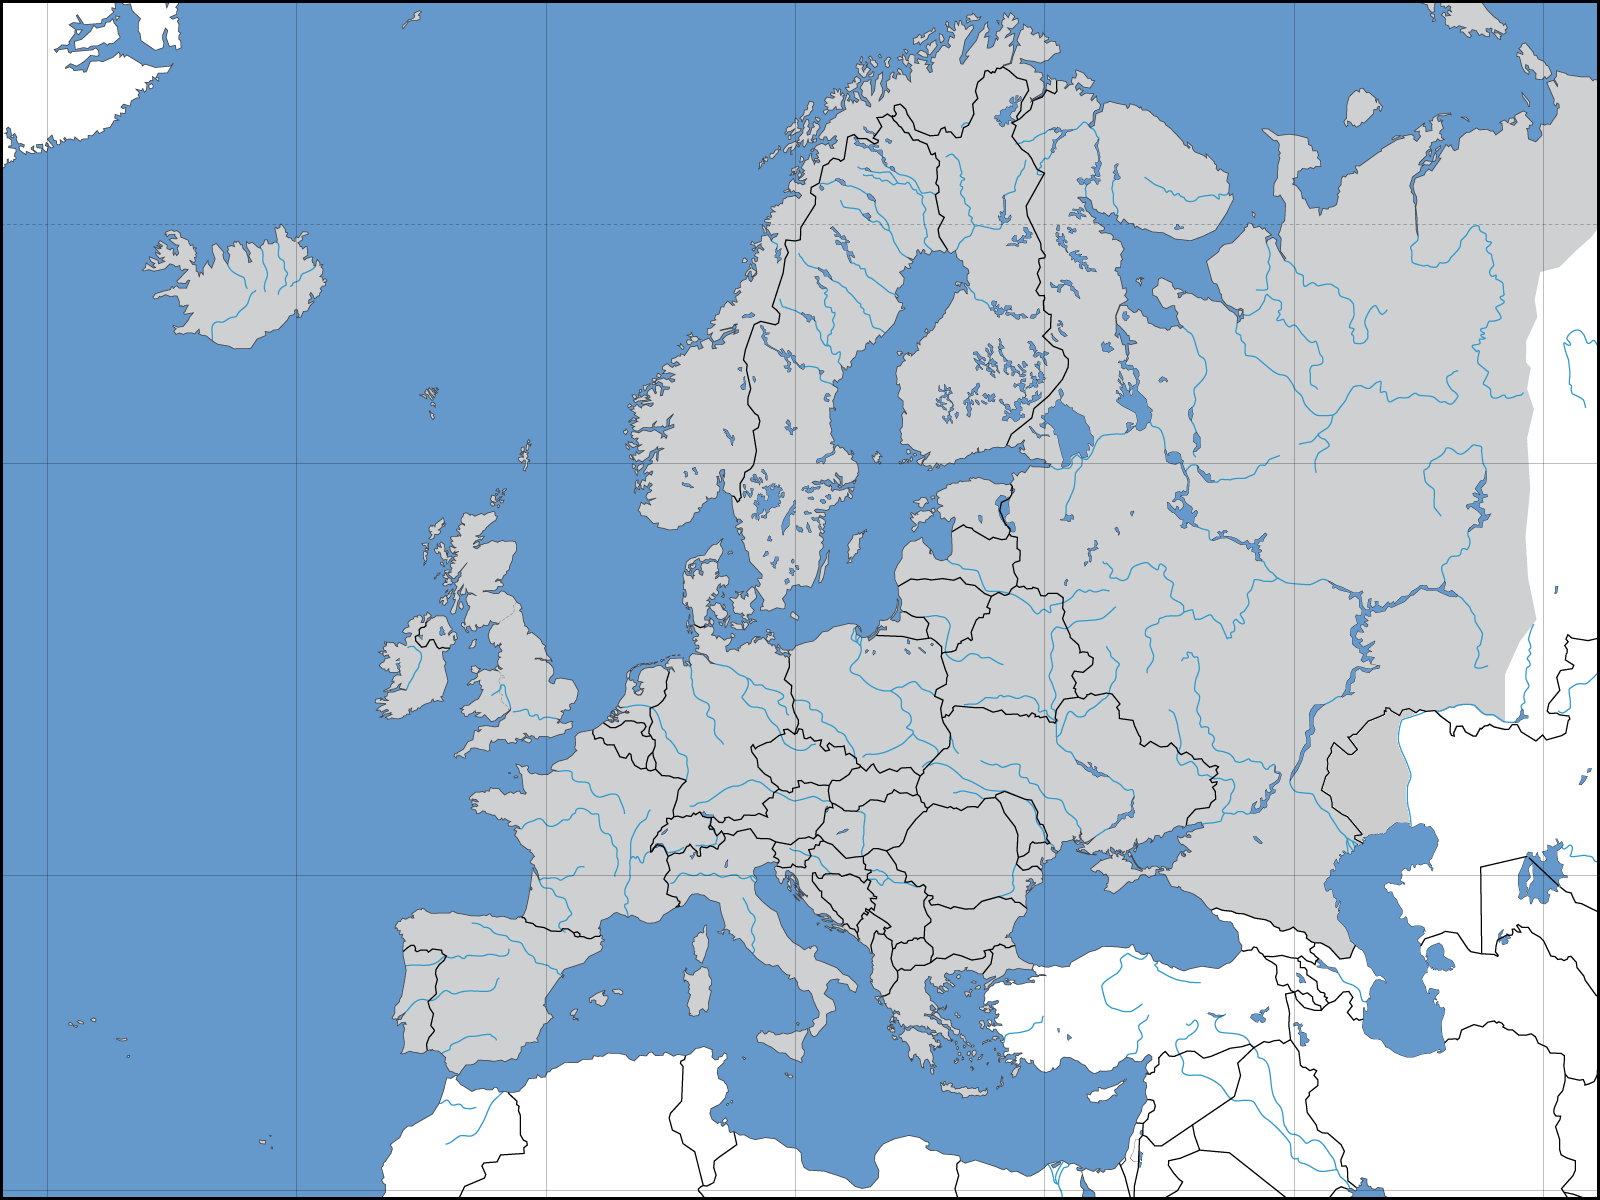 mapa de europa mudo político